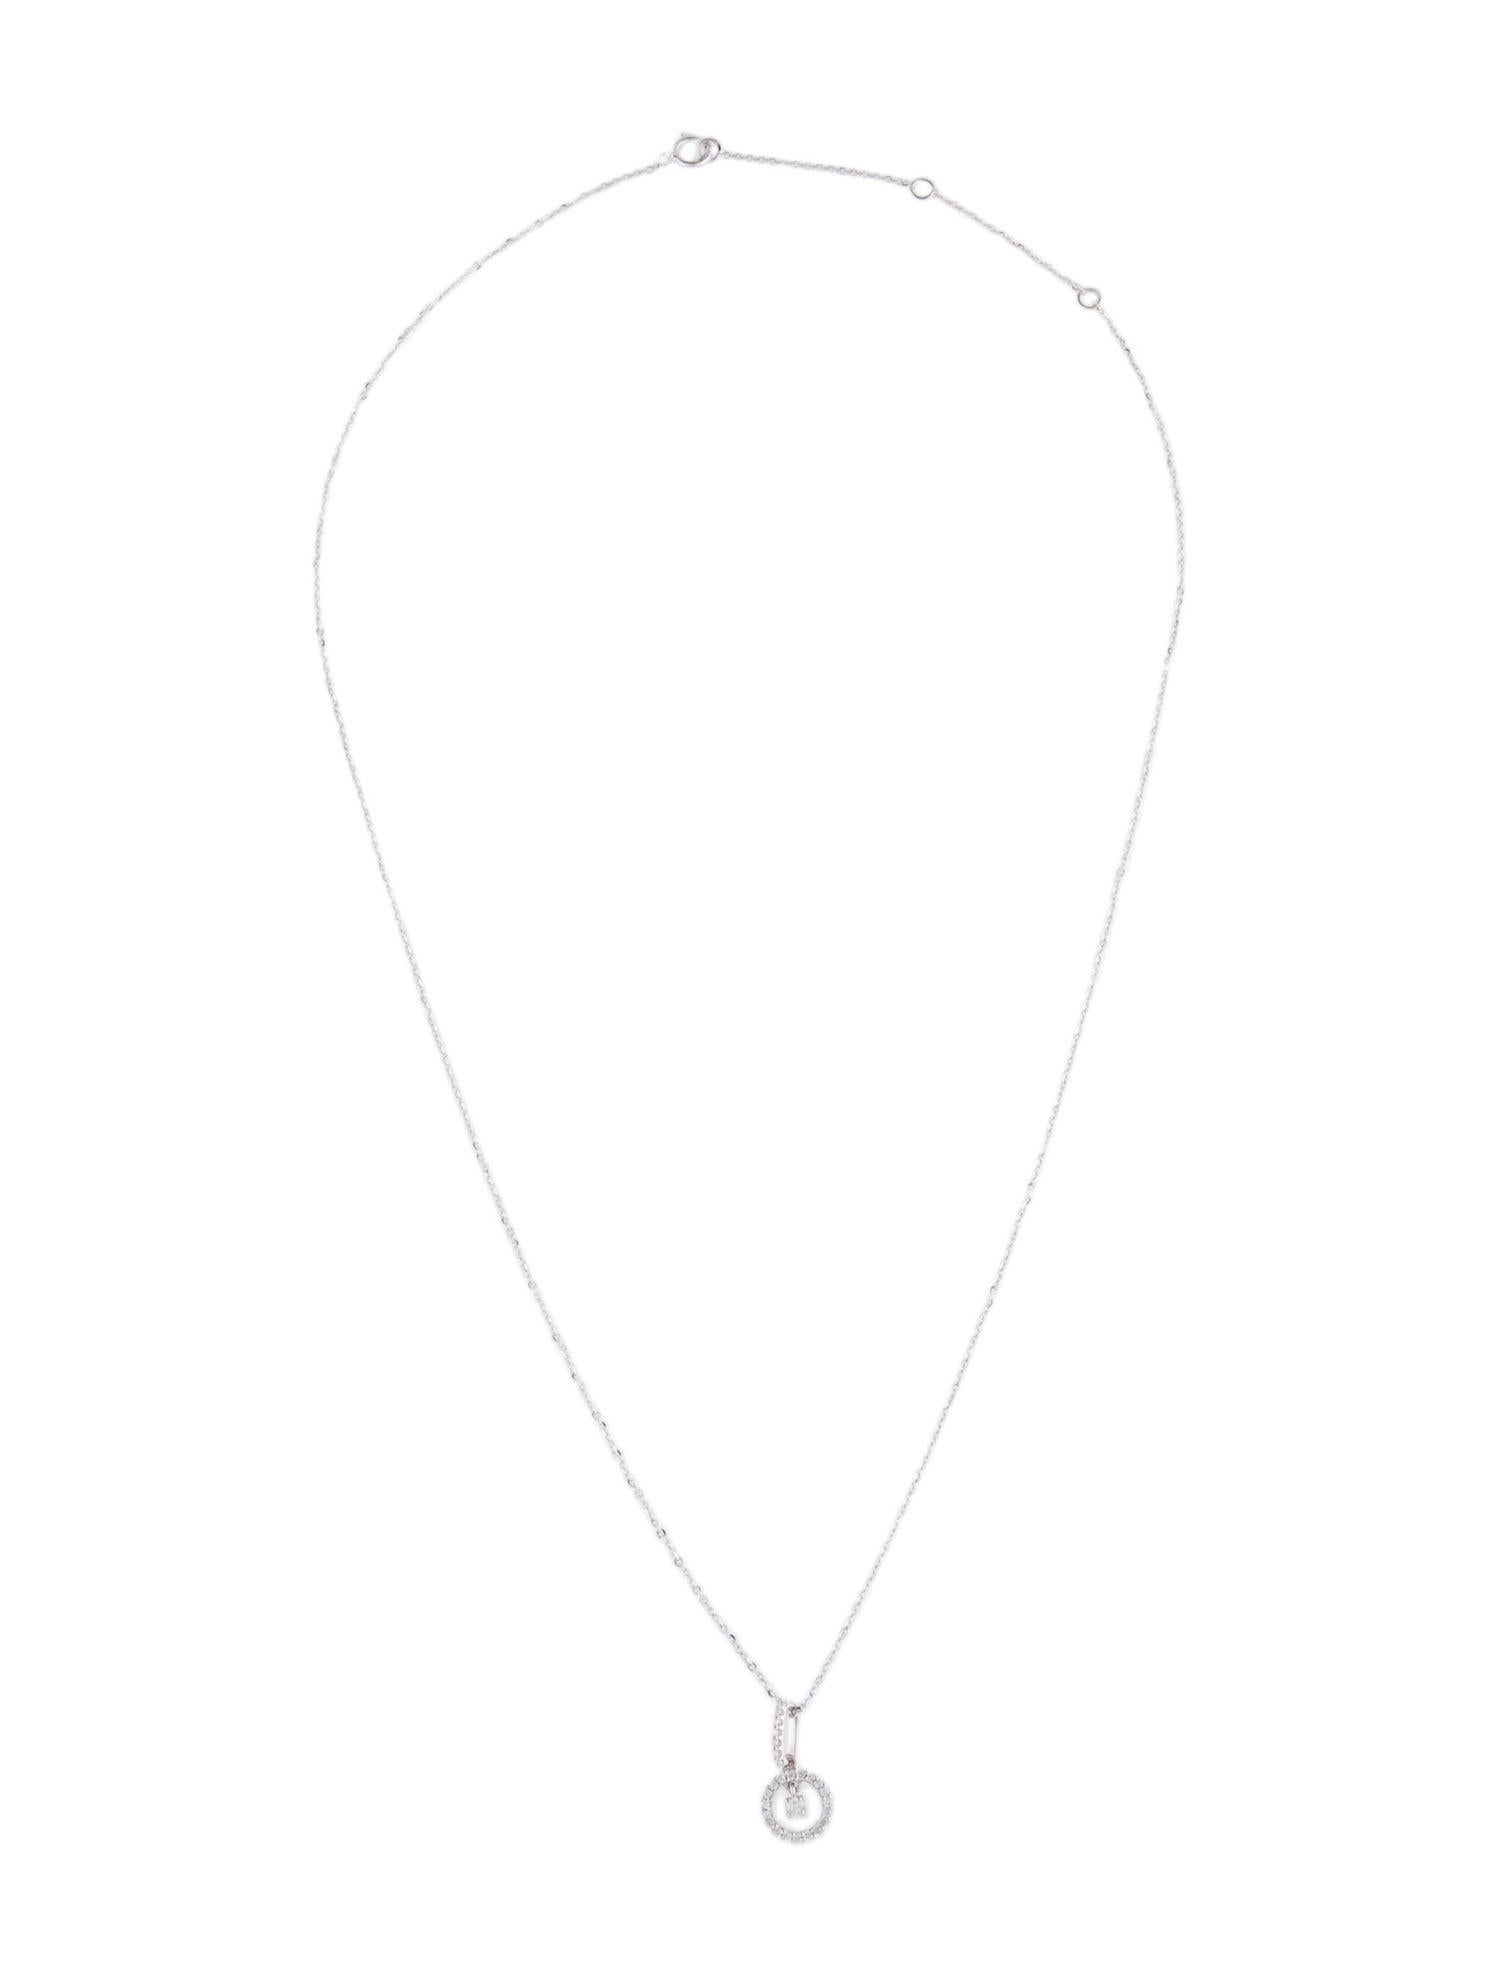 Brilliant Cut Luxury 14K Diamond Pendant Necklace - Exquisite Statement Piece in White Gold For Sale